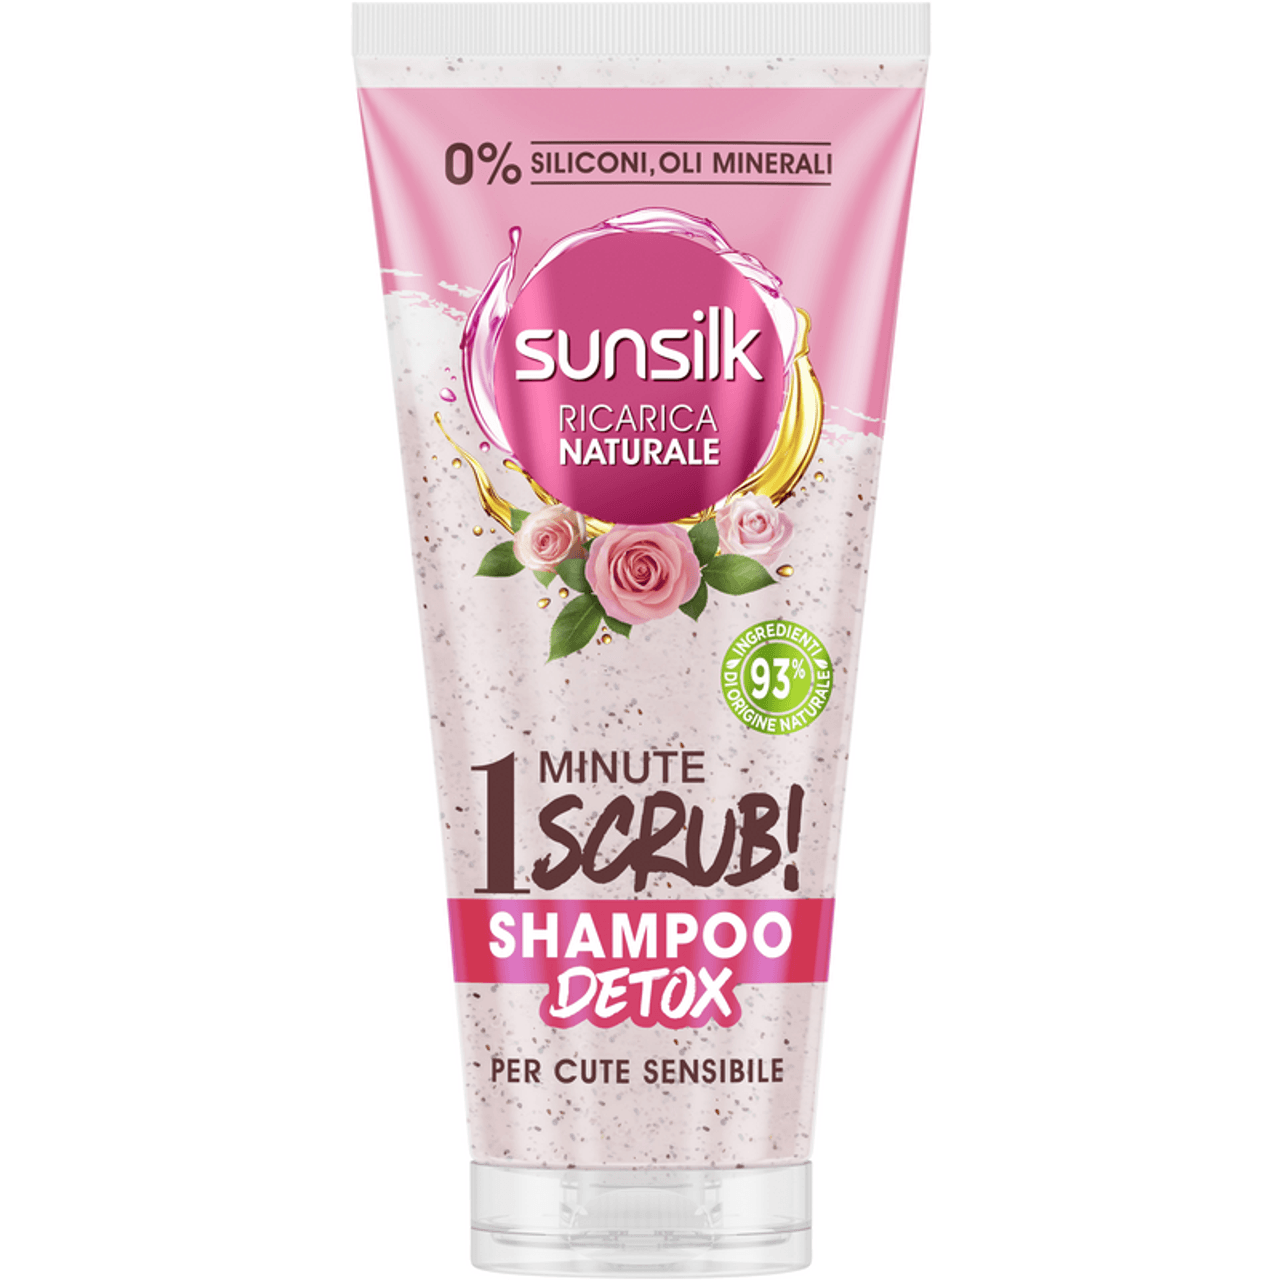 Sunsilk Shampoo Detox 1 Minute Scrub! Per cute sensibile - Jasmine Parfums- [ean]